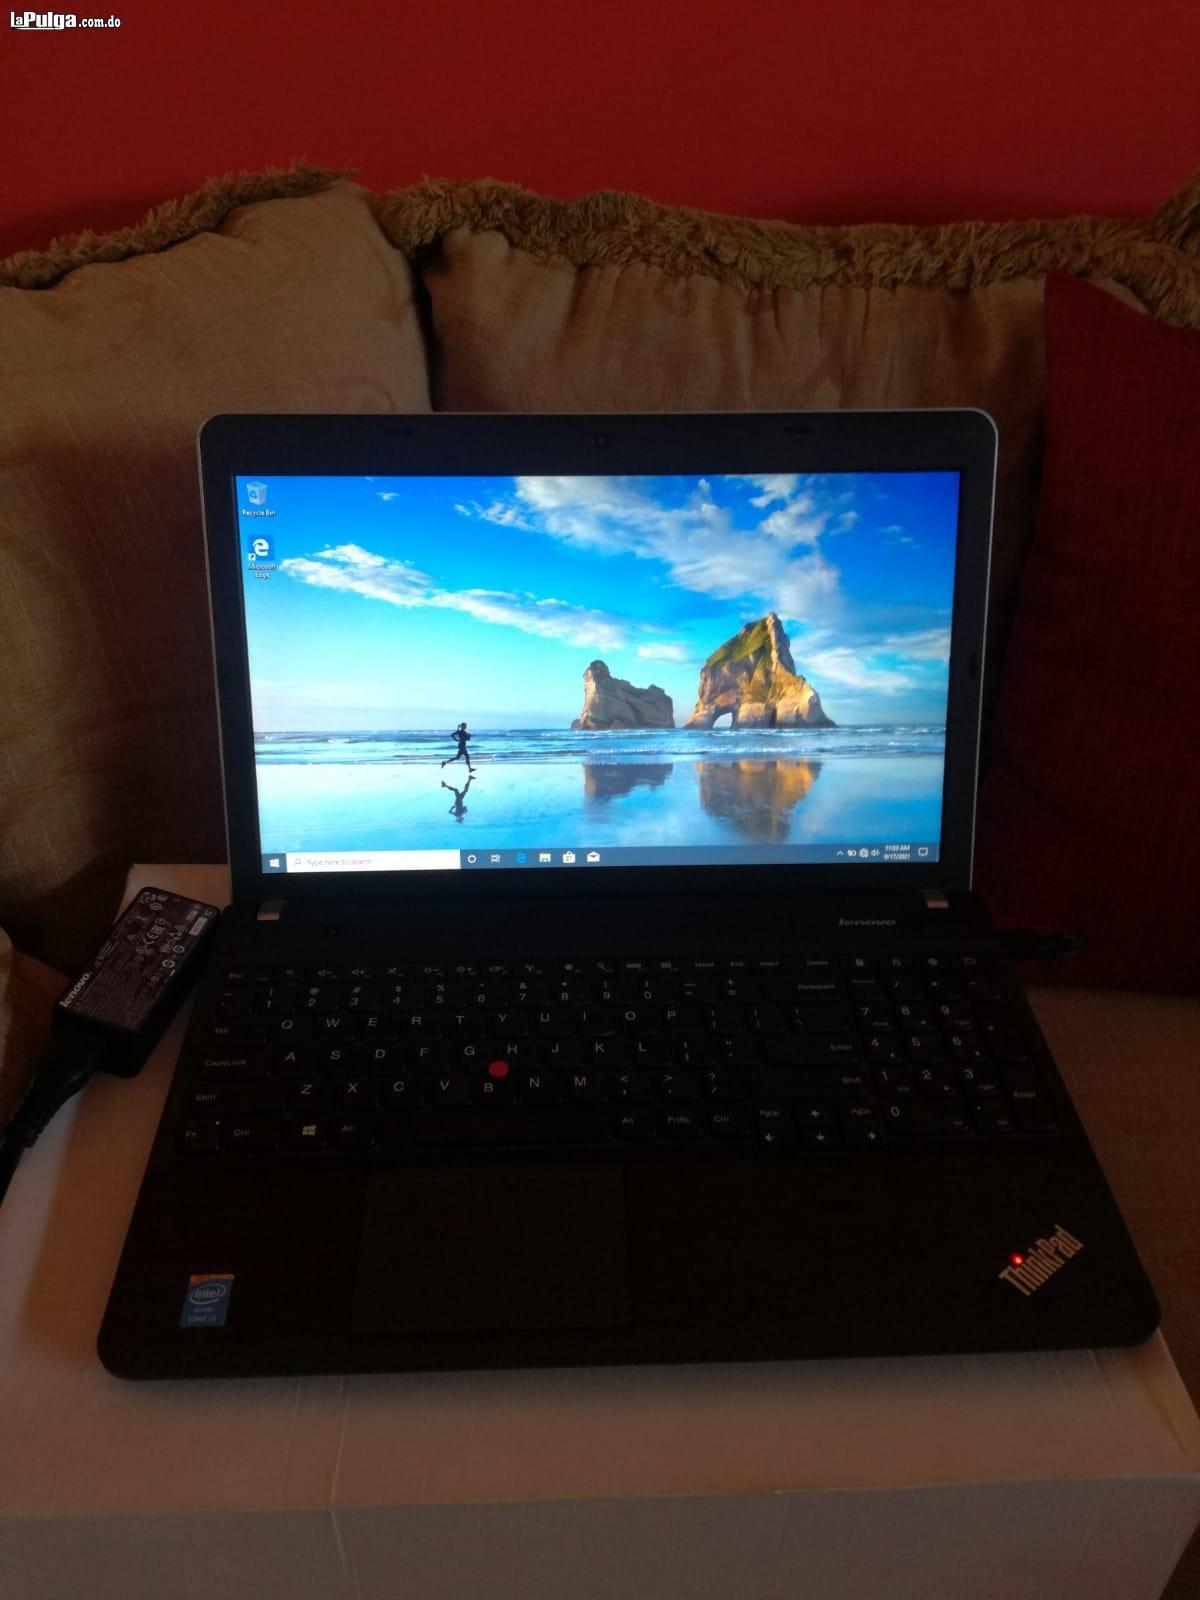 Pc laptop OFERTON Lenovo E540 i3-4000m 6gb 120gb SSD Win10 Esp Foto 7149604-3.jpg